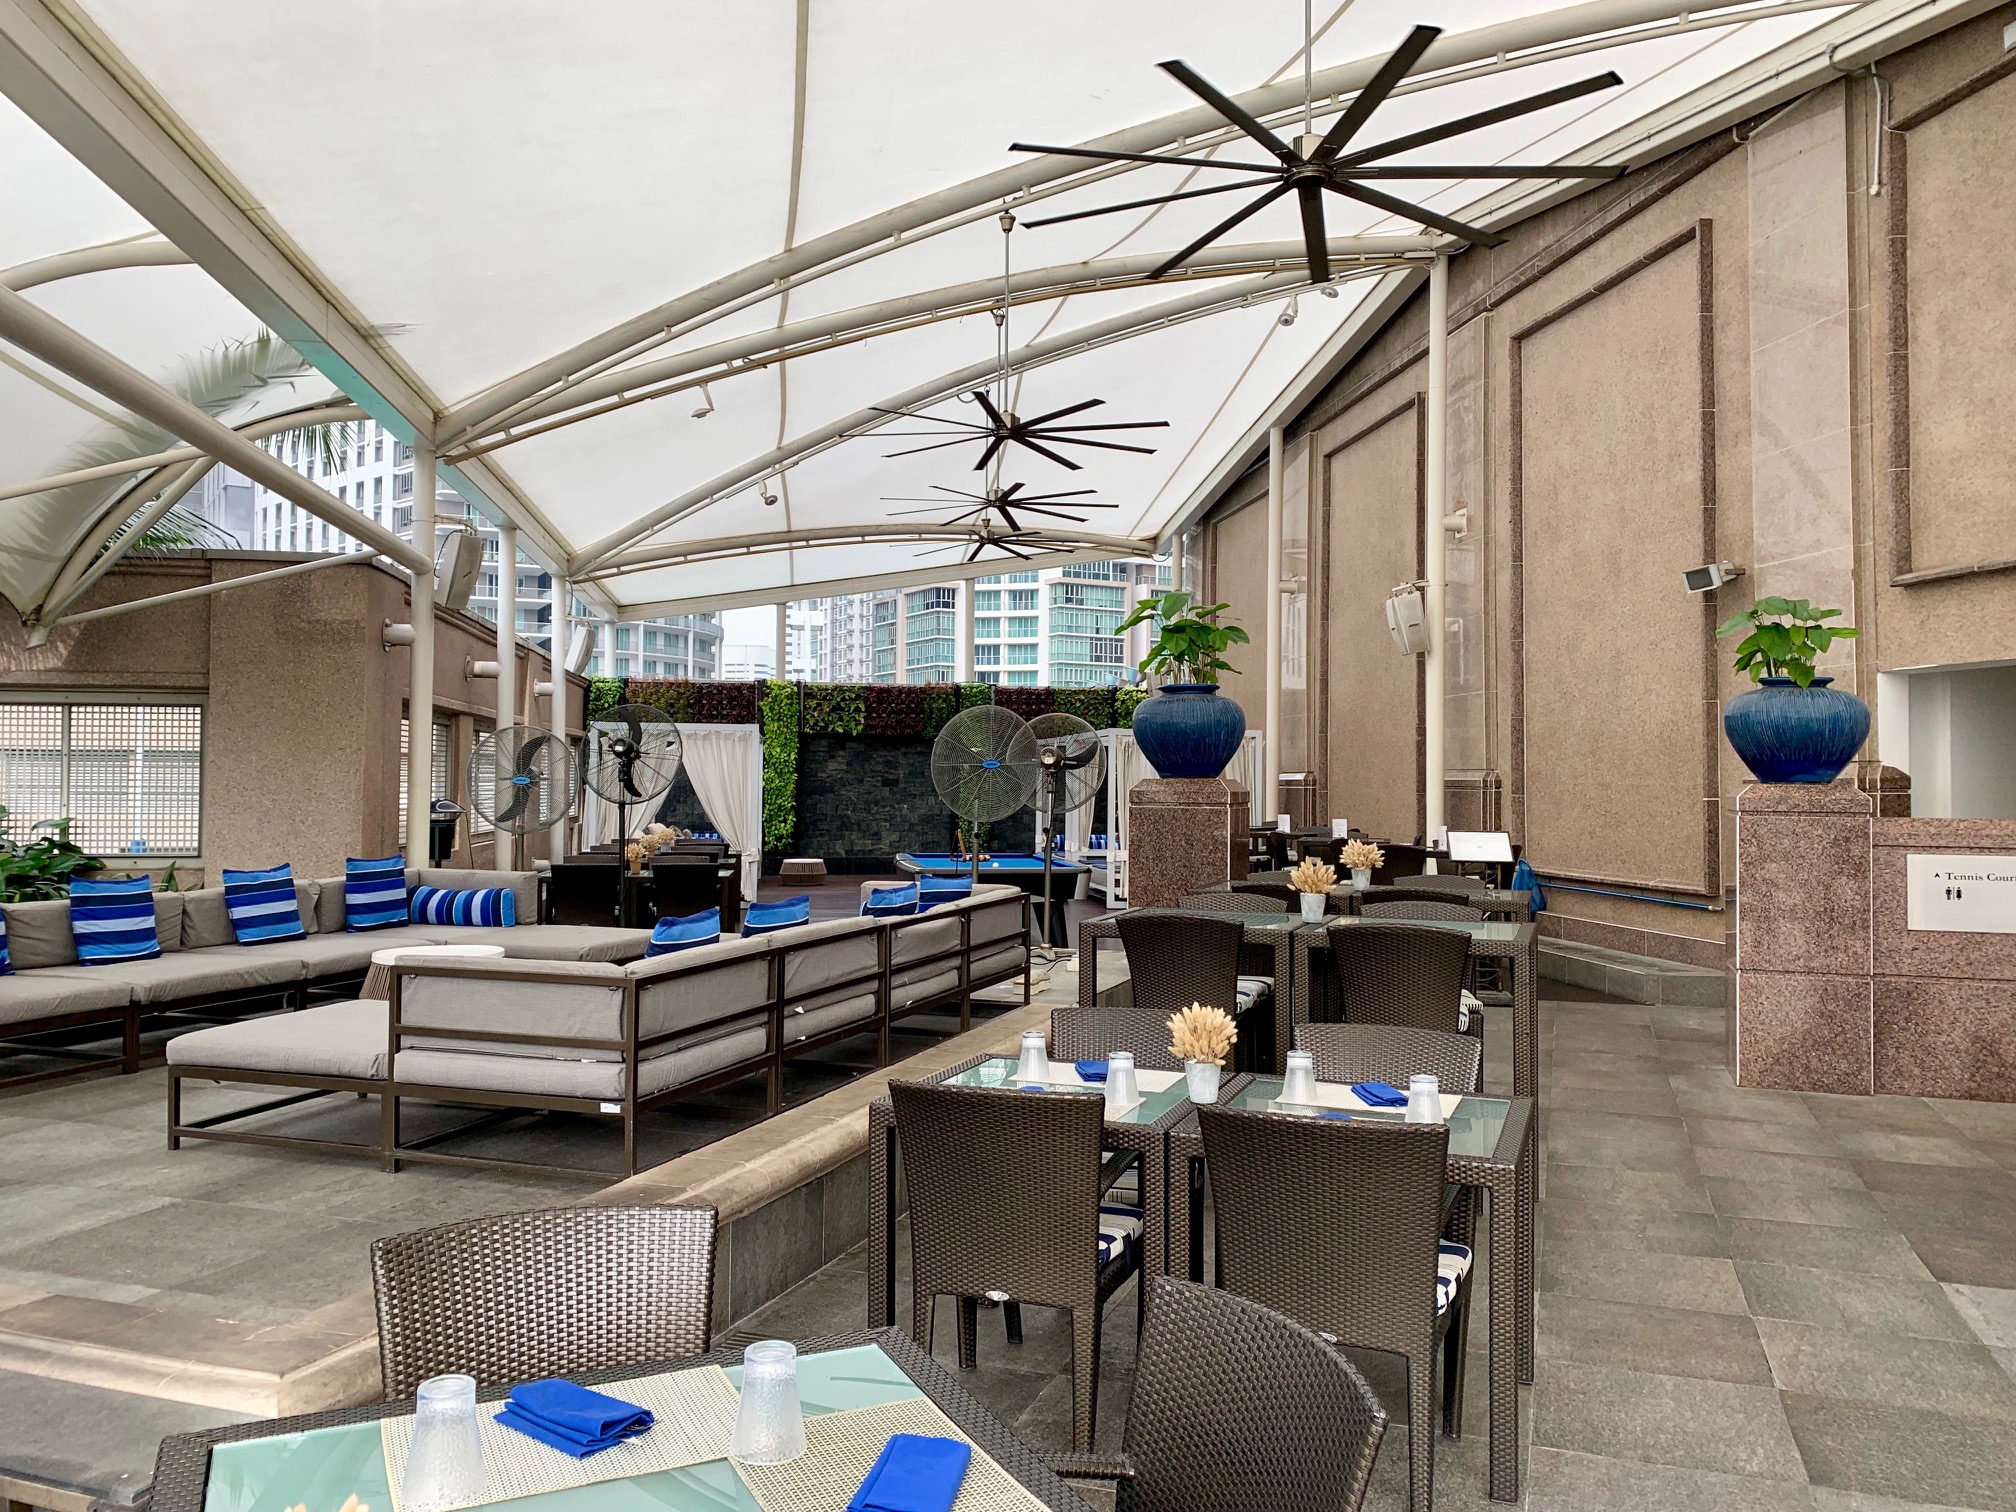 Mandarin Oriental hotel Kuala Lumpur review - Turning left for less